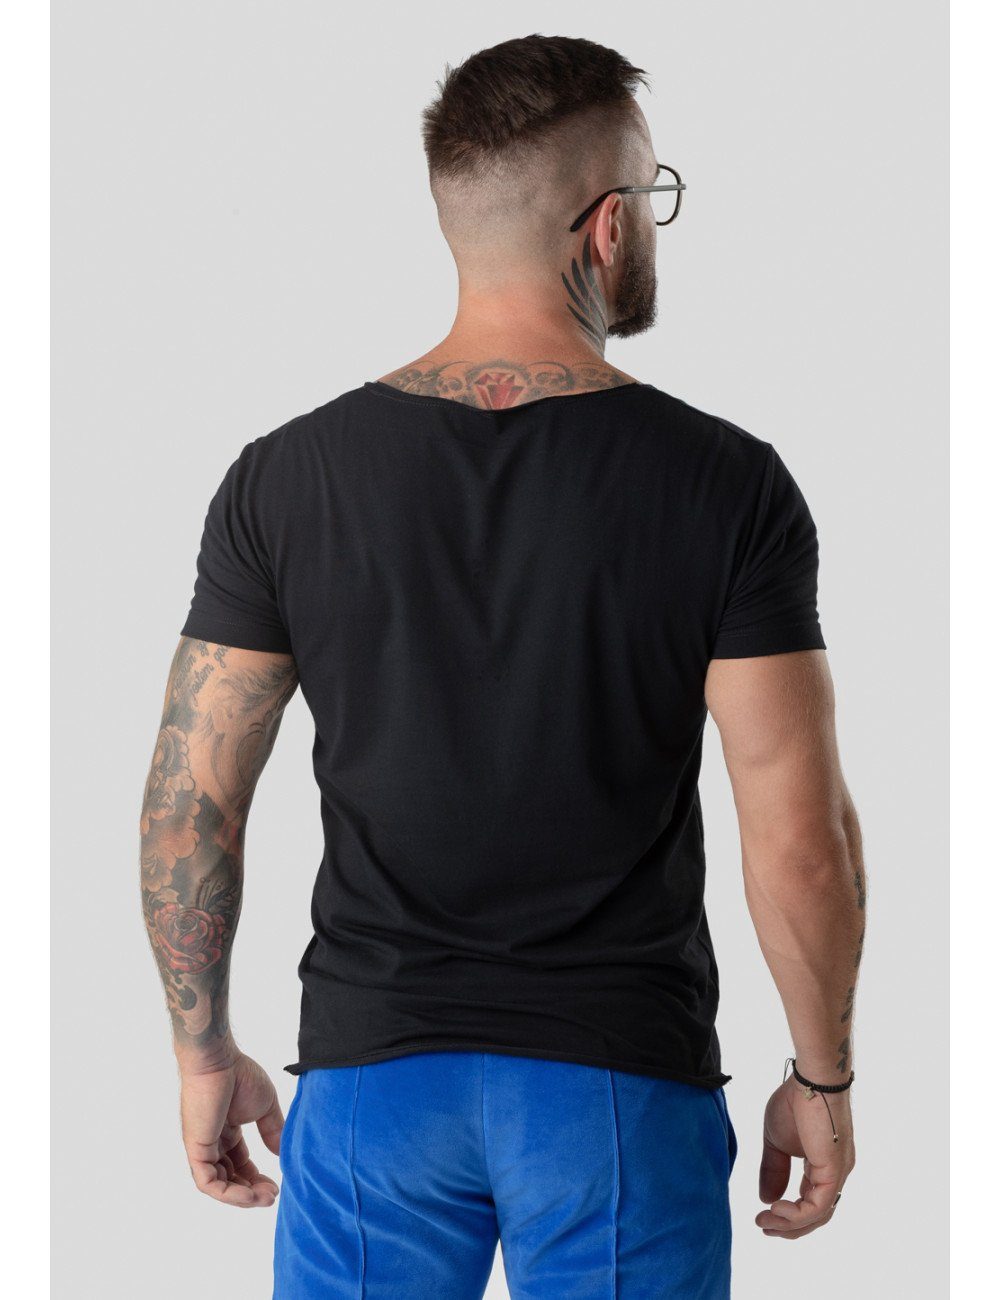 Logostrickerei Trendiges Schwarz AMIGOS V-Neck TRES mit Shirt T-Shirt